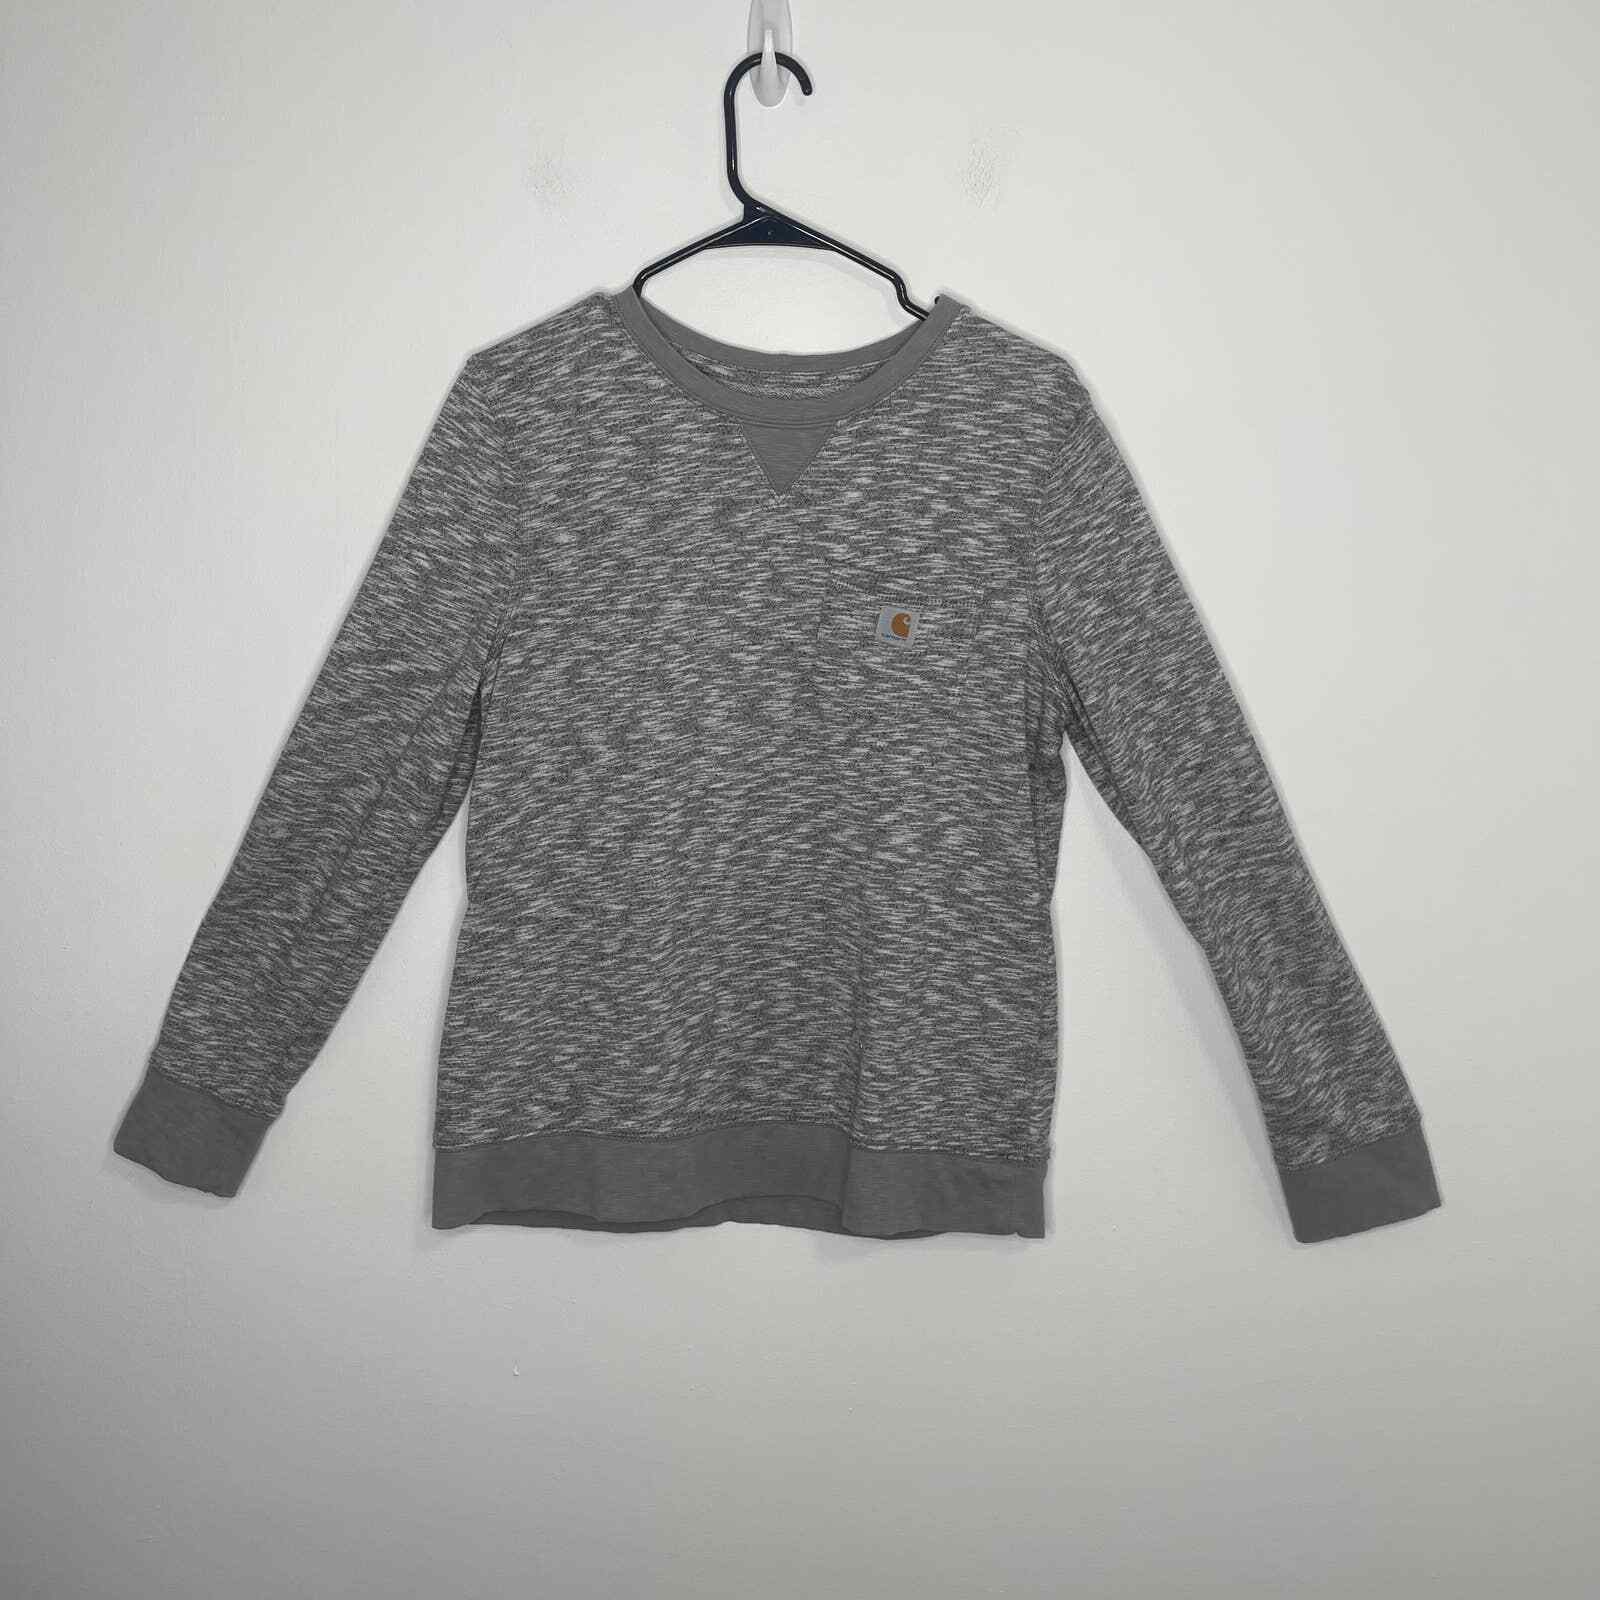 Carhartt Girls Size Large Gray Sweatshirt Sweater Pullover Shirt Fits Xs Woman